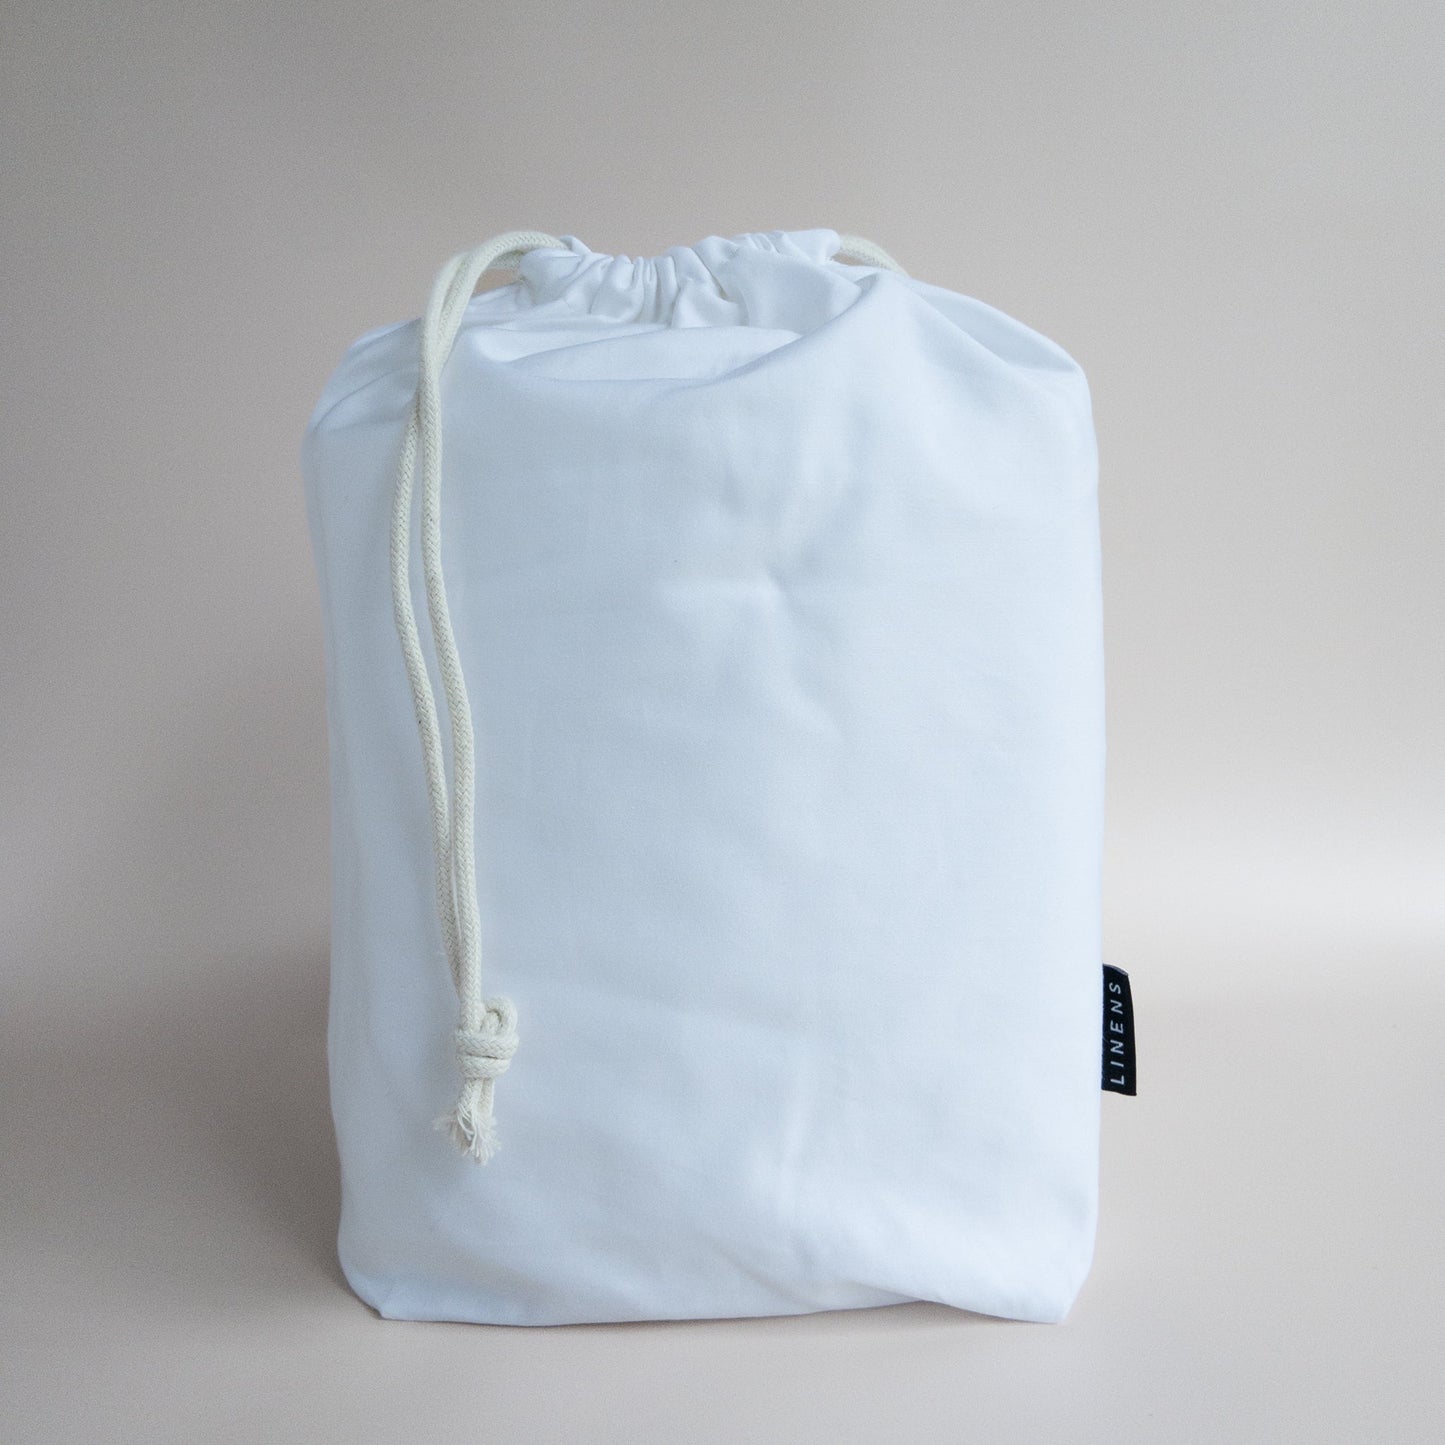 Mini Cot Waterproof Sheet - Brilliant White - Little Human Linens